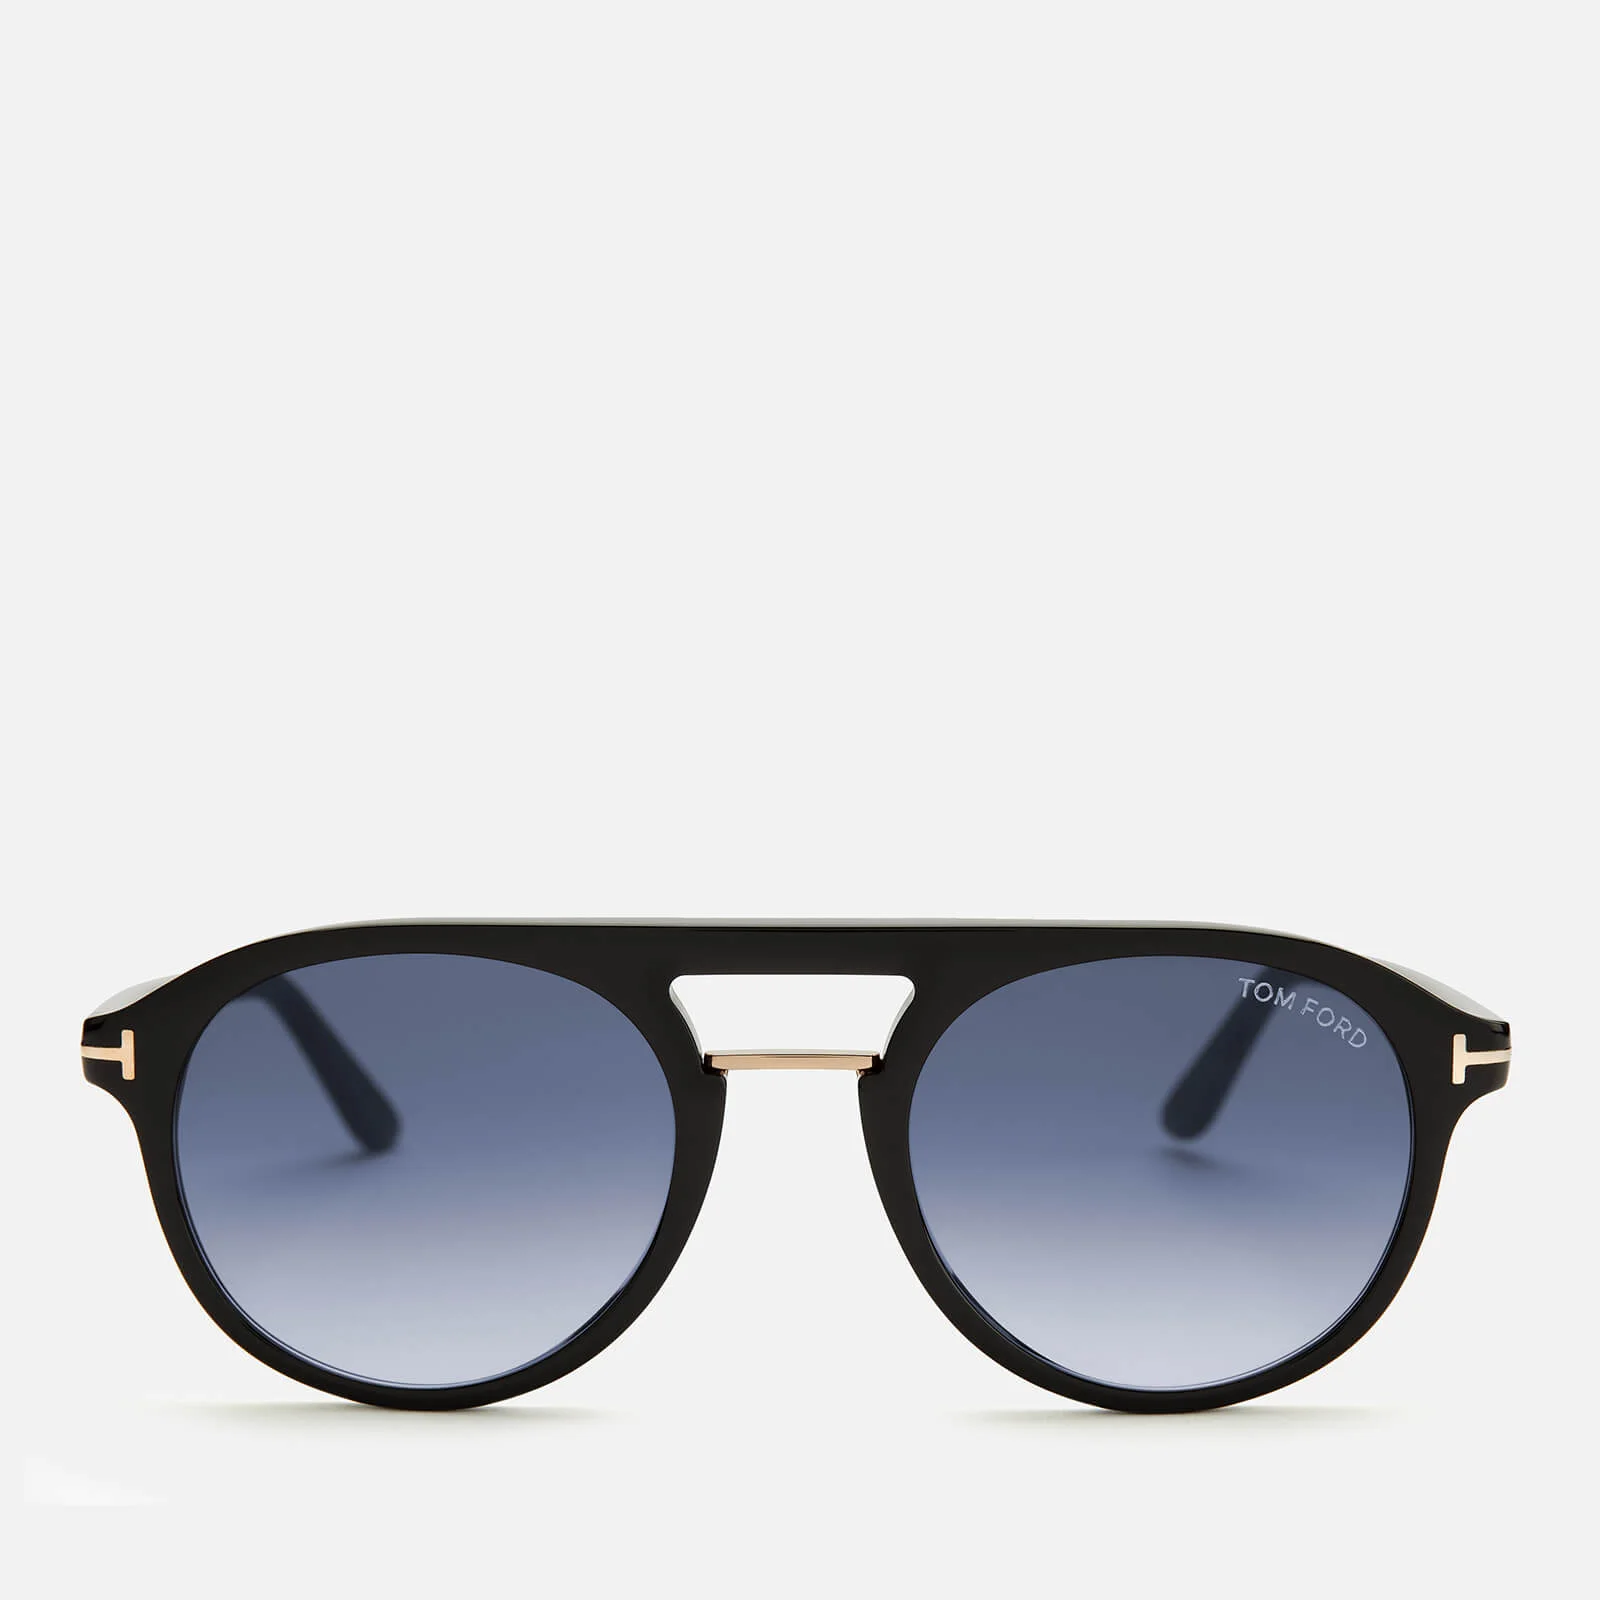 Tom Ford Men's Ivan Sunglasses - Shiny Black/Gradient Blue Image 1